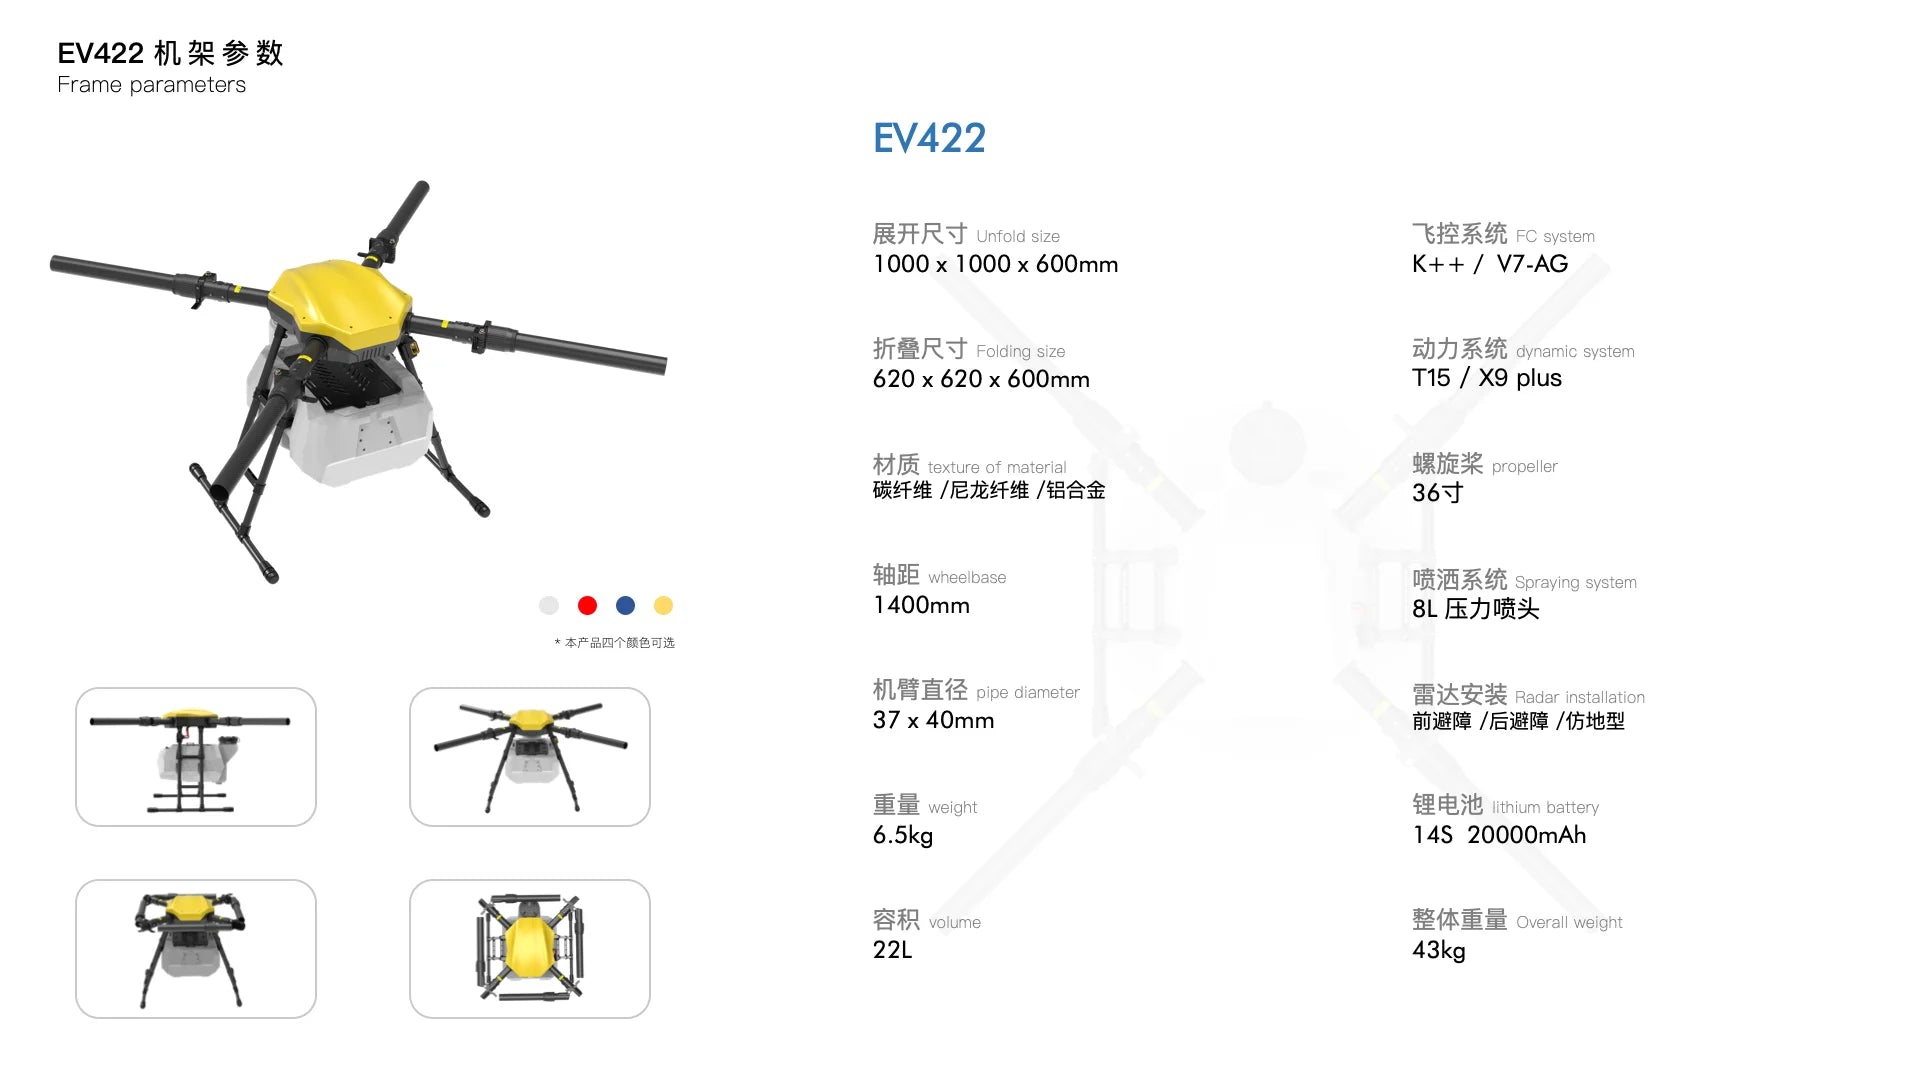 JIS EV422 22L Agriculture drone, Eitt Iithium battery 6.5kg 14S 2000OmAh Z